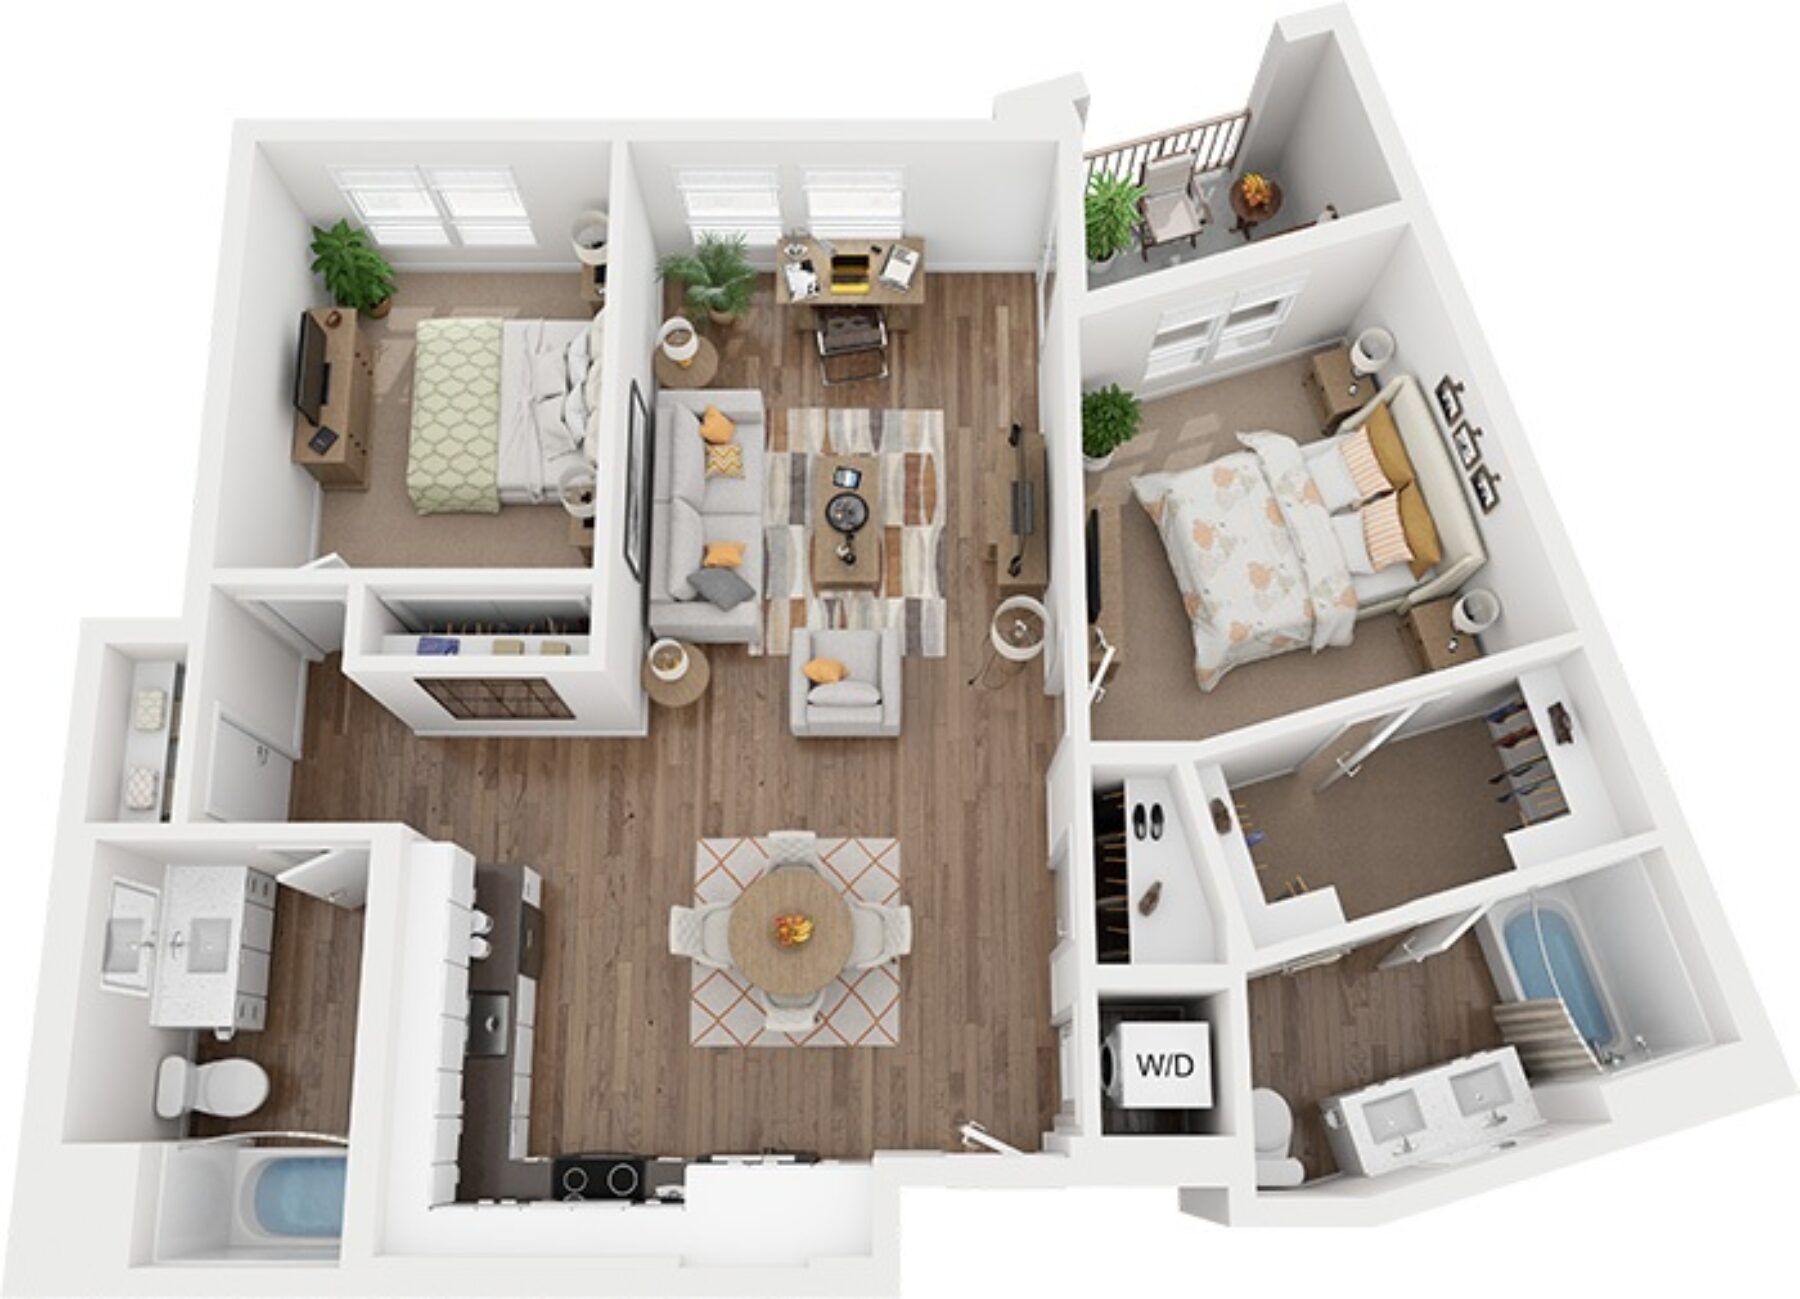 Plan Image: B4 - Two Bedroom